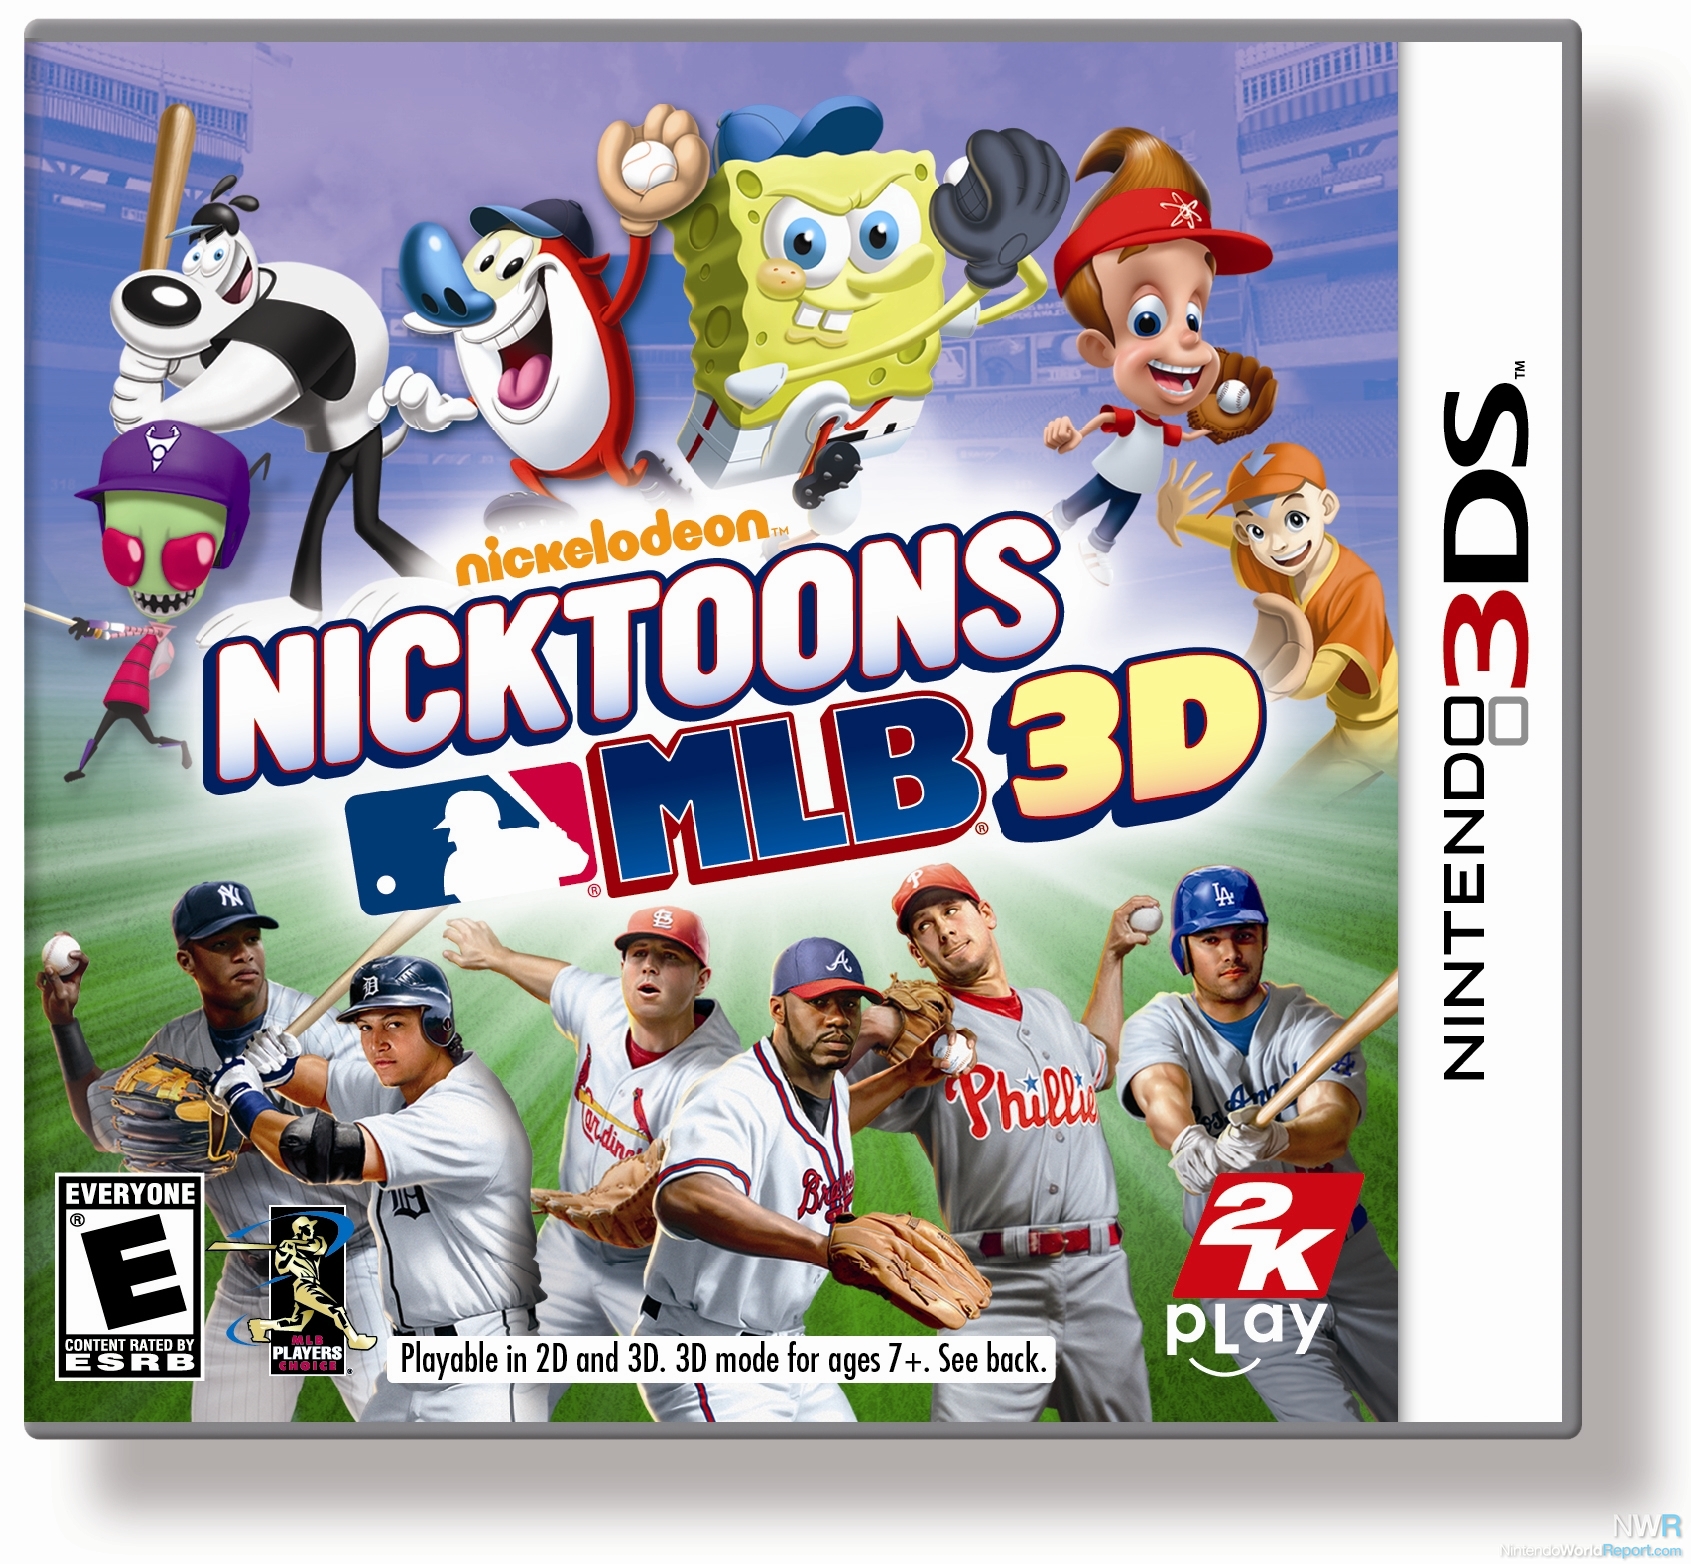 Nicktoons MLB 3D Review - Review - Nintendo World Report